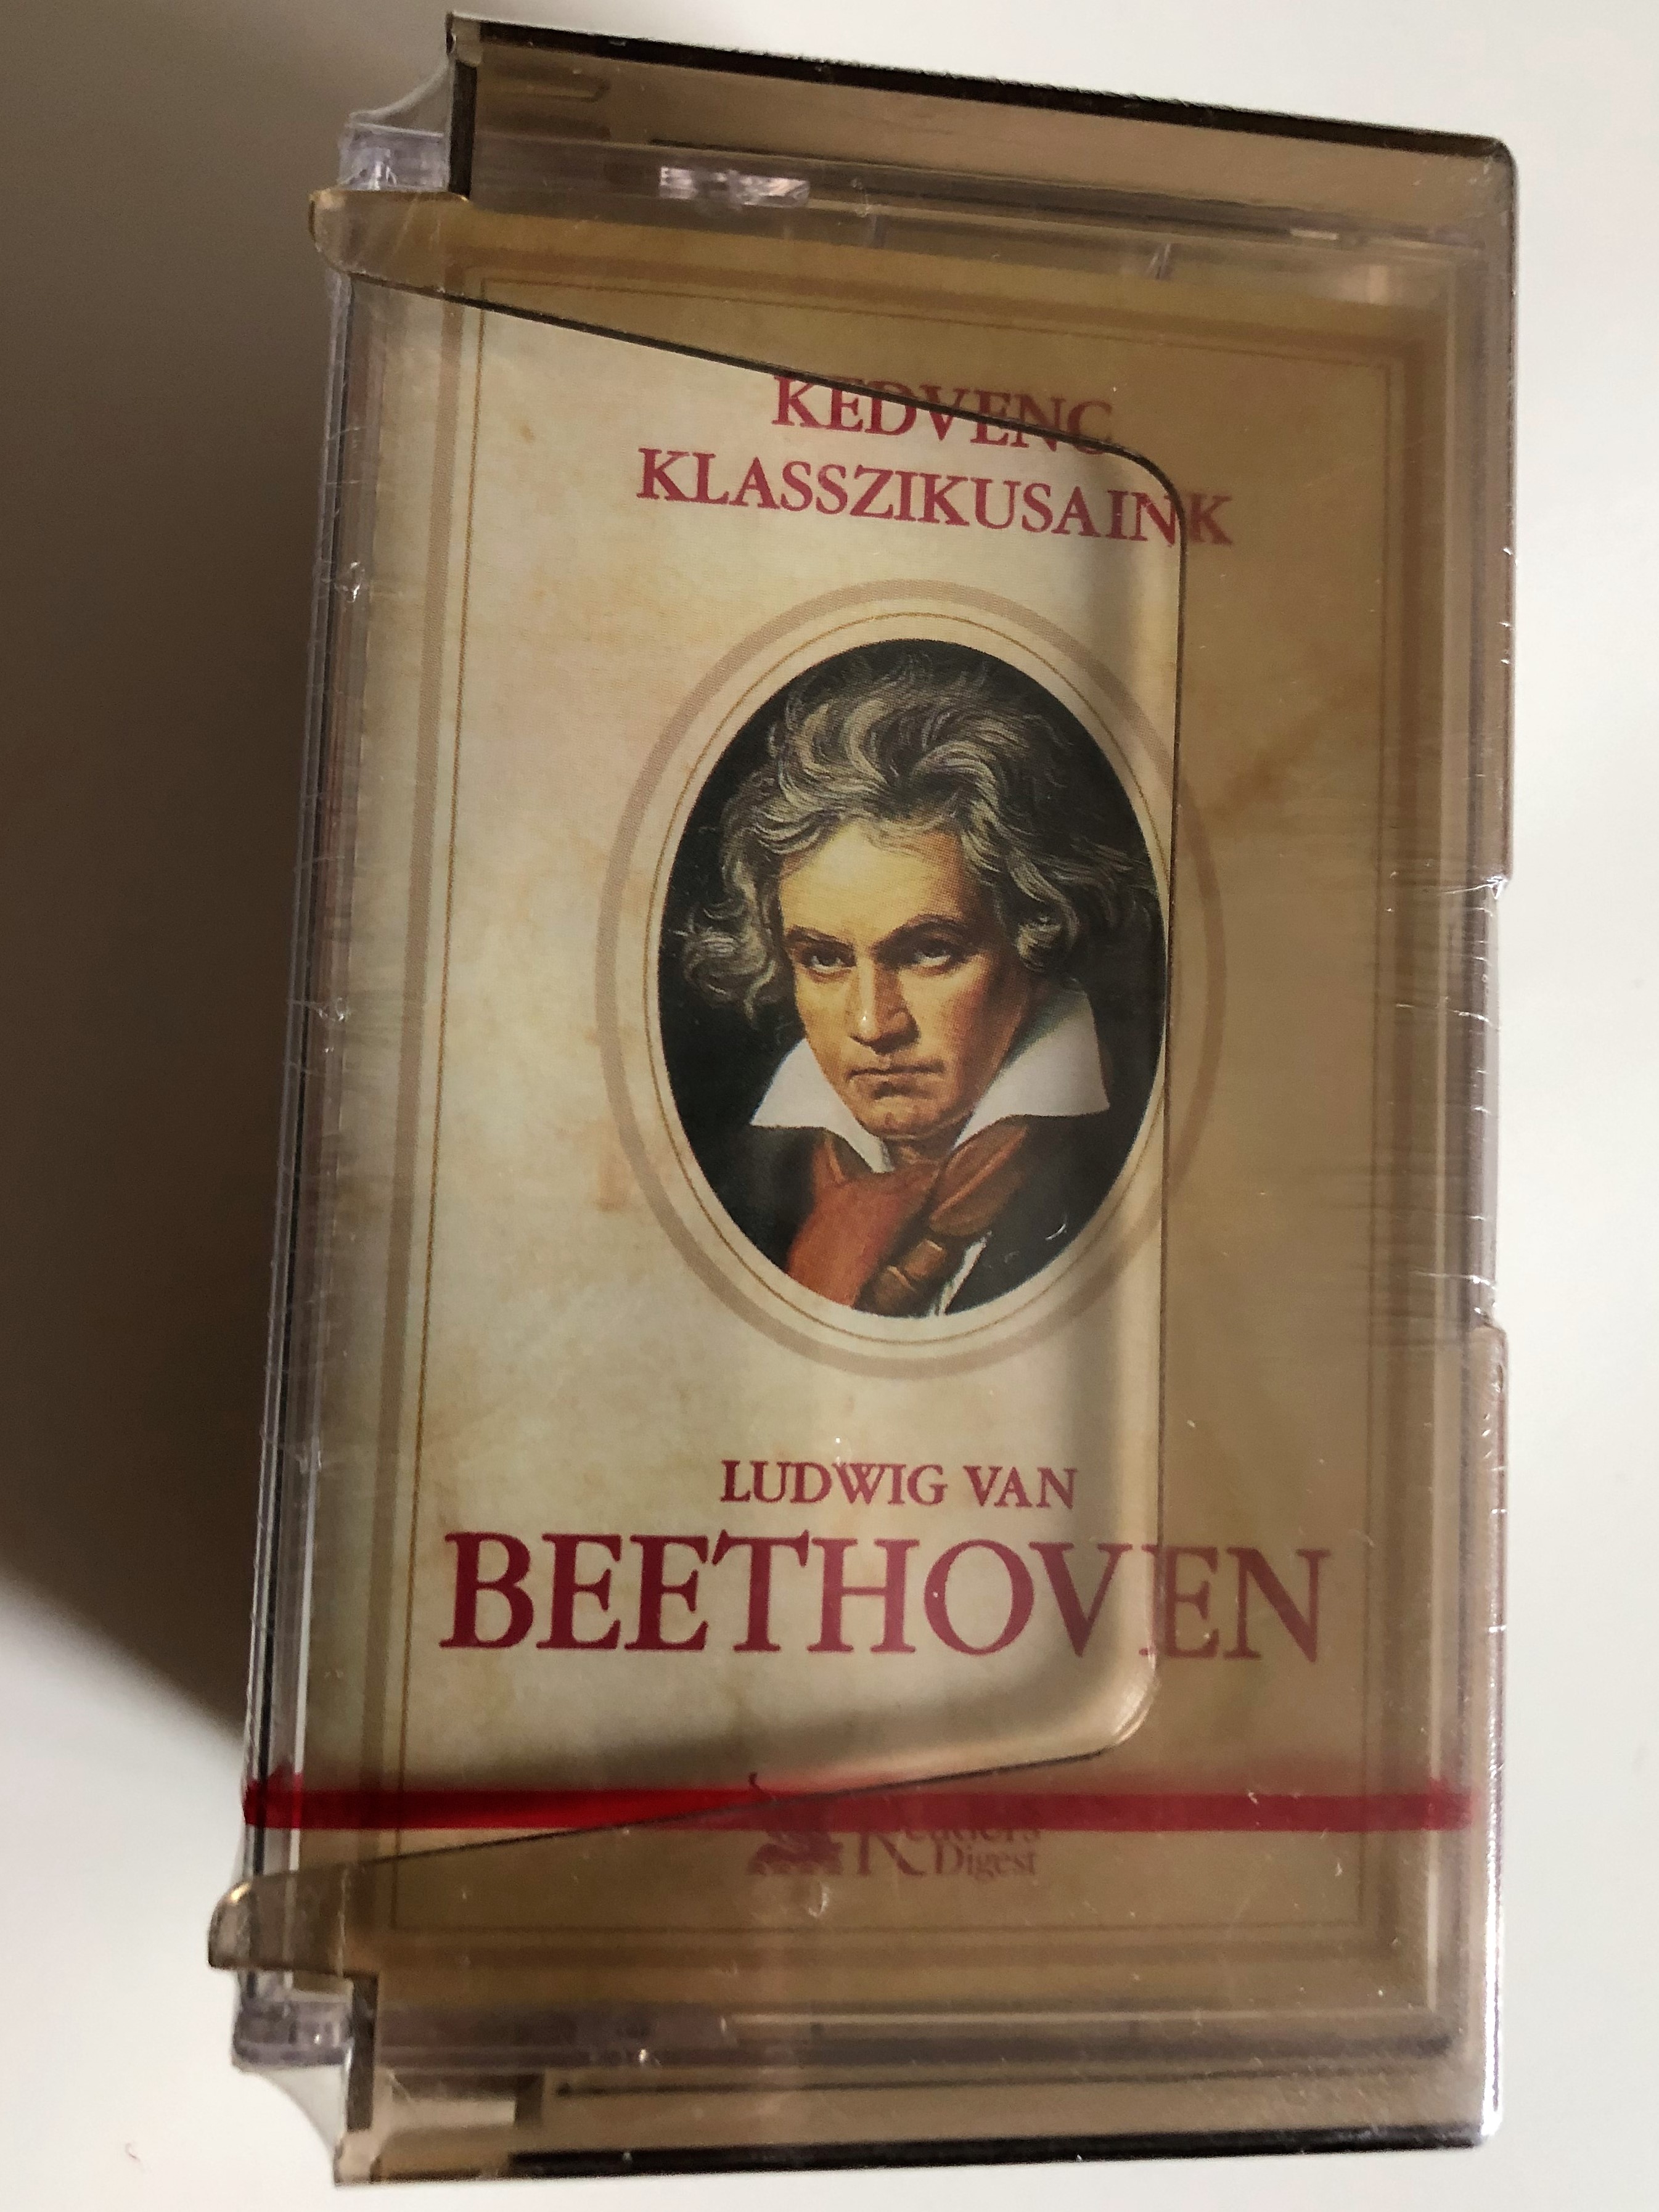 ludwig-van-beethoven-kedvenc-klasszikusaink-favorite-classics-set-of-3-audio-casettes-reader-s-digest-2001-ms-0111-bl-1-.jpg